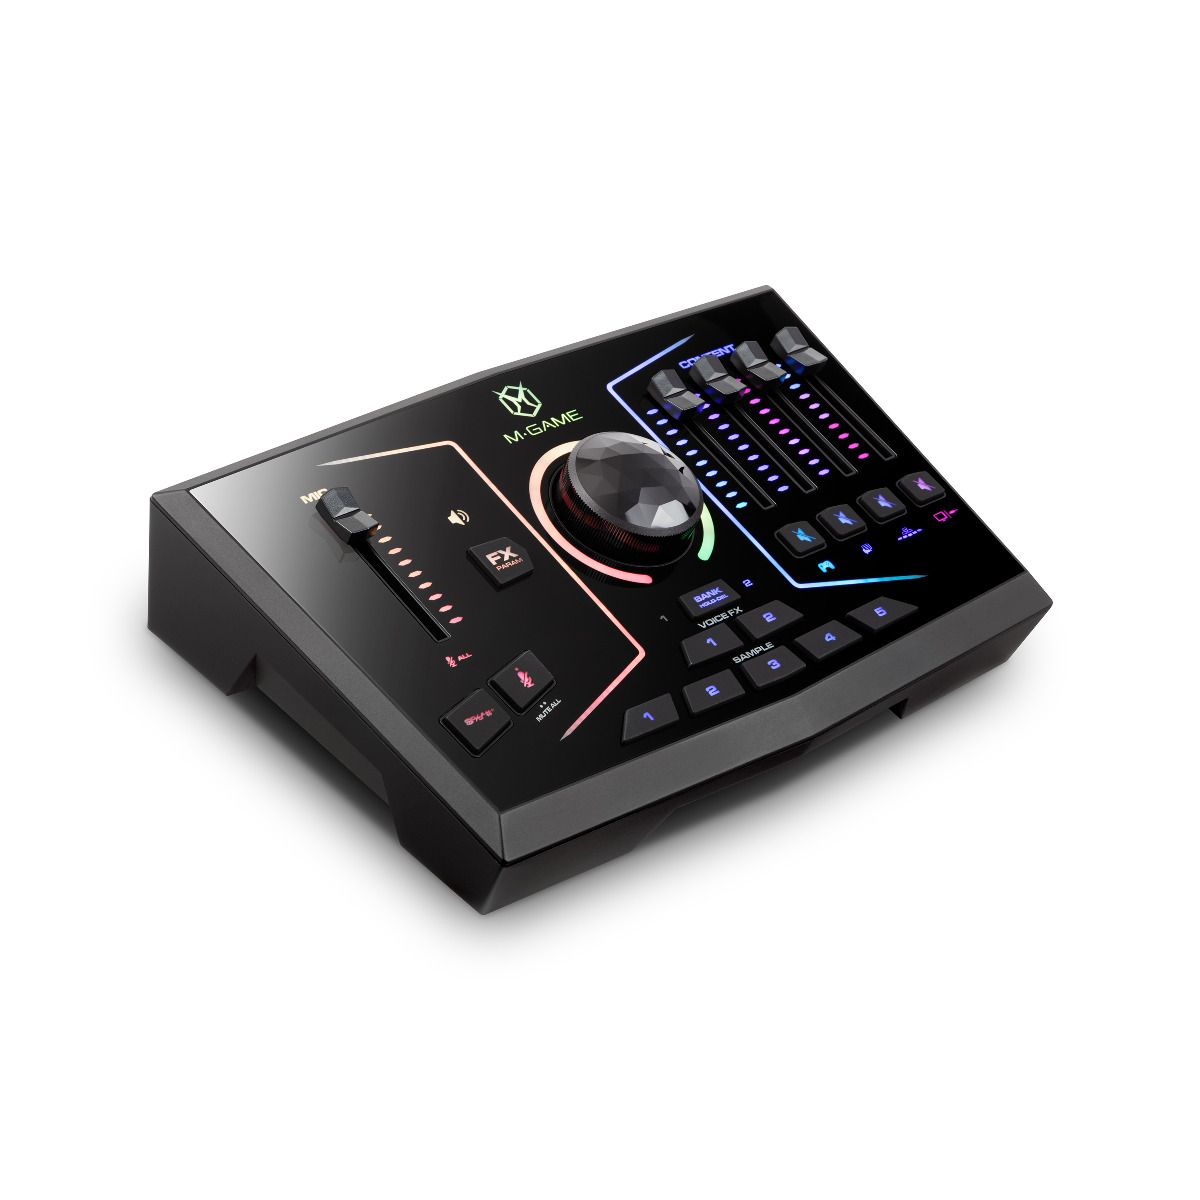 M-Audio M-Game RGB Dual USB Streaming Mixer